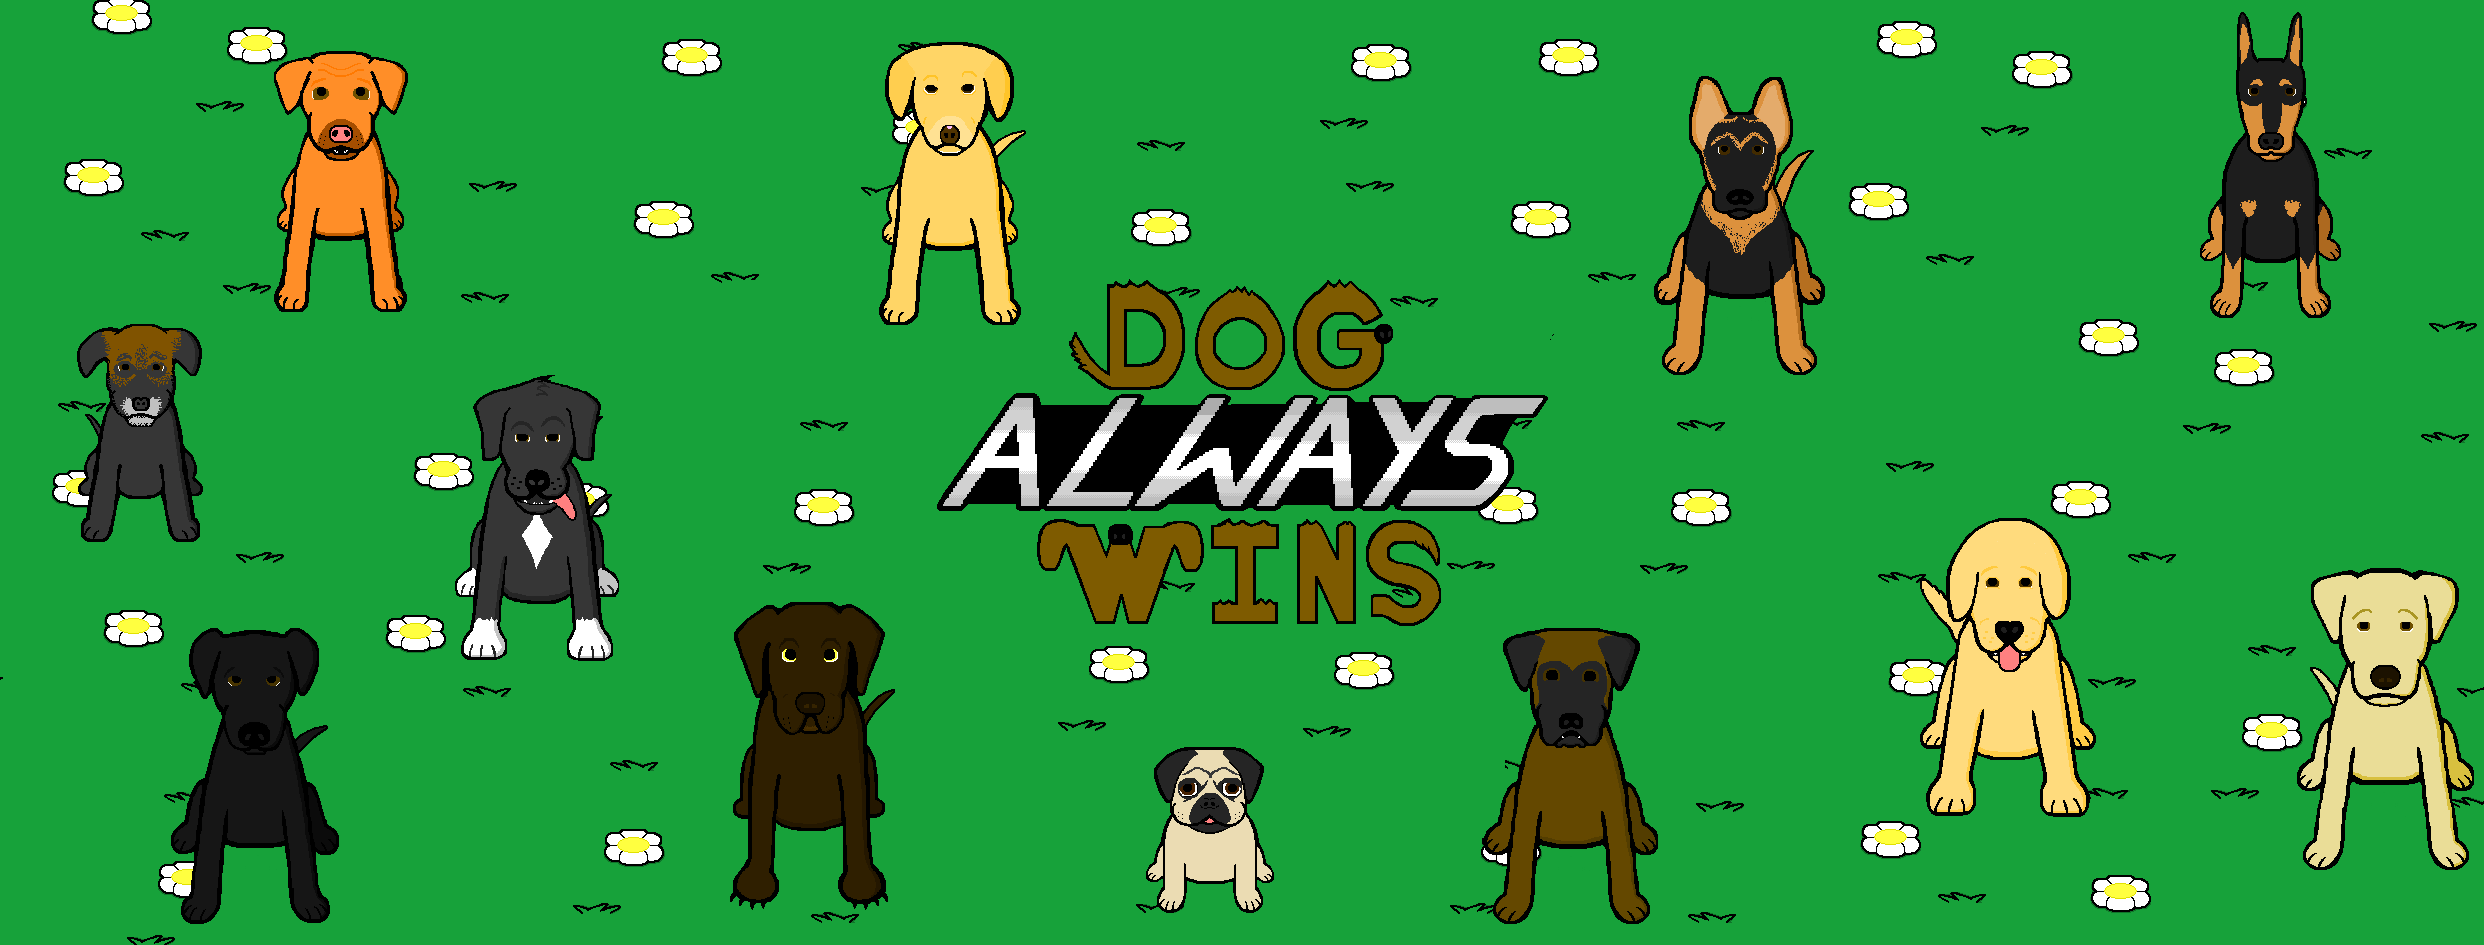 Dog Always Wins